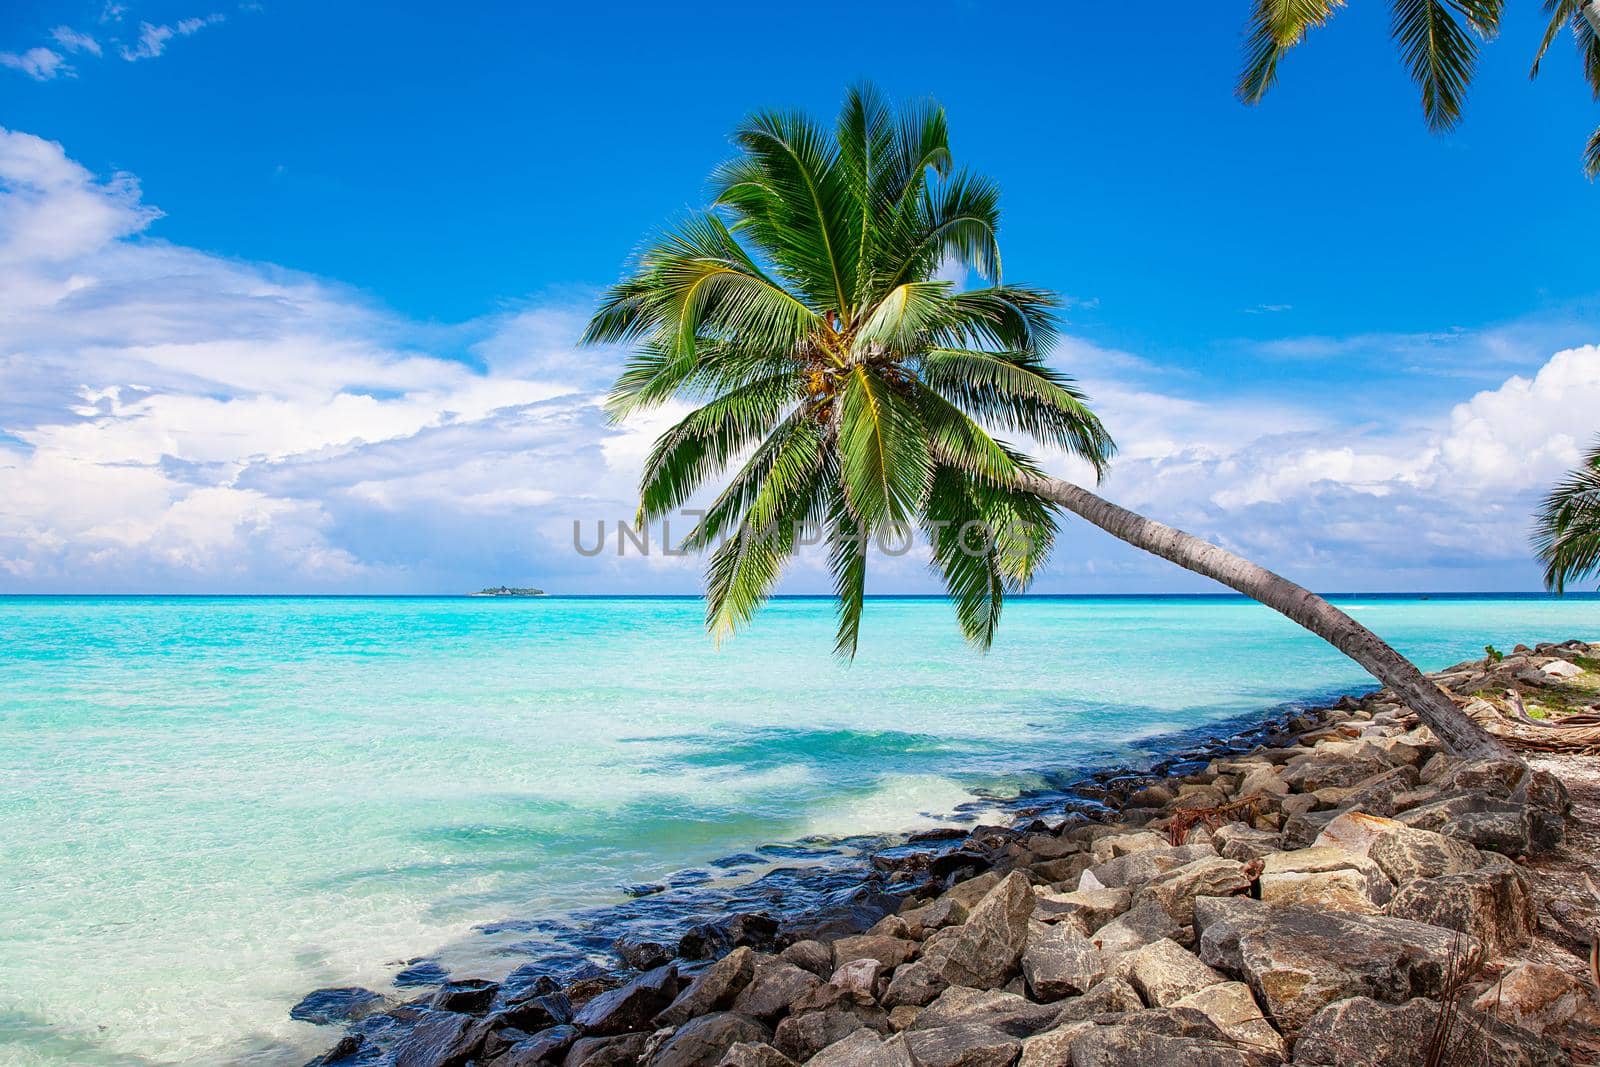 Maldive Islands Sand Beach and green palm foliage view by kisika